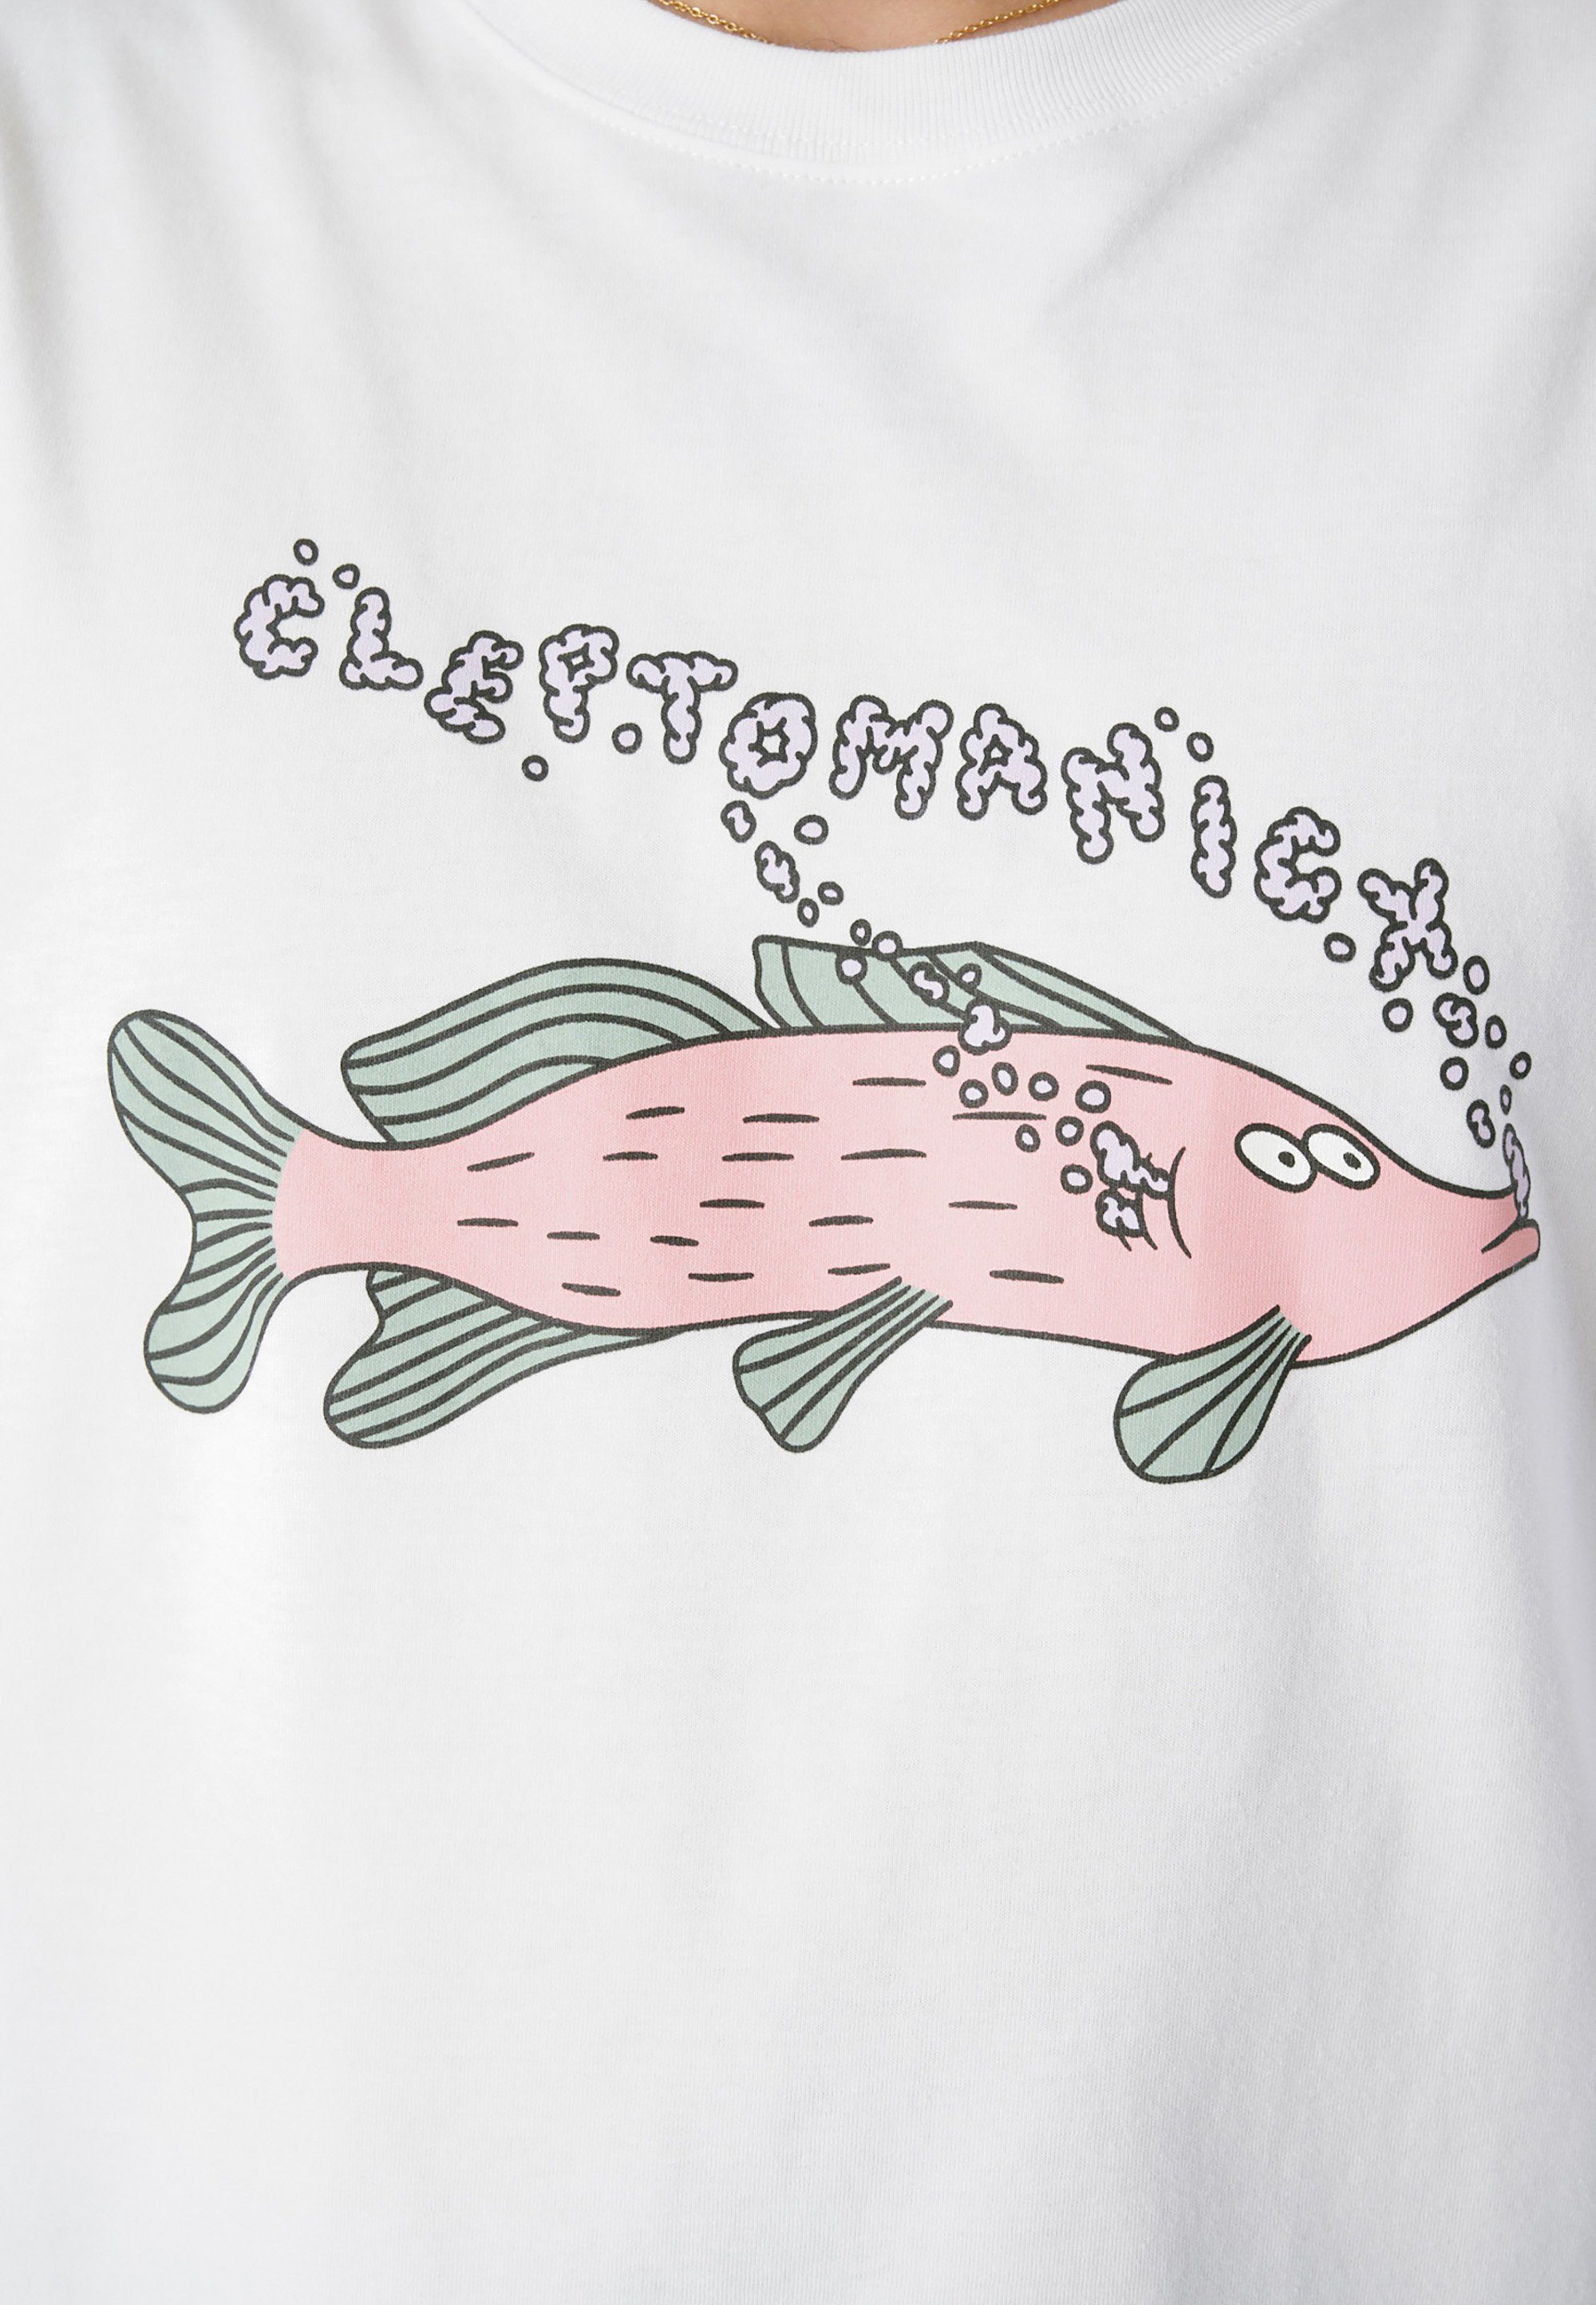 Schnitt T-Shirt Cleptomanicx lockerem mit Bubbles